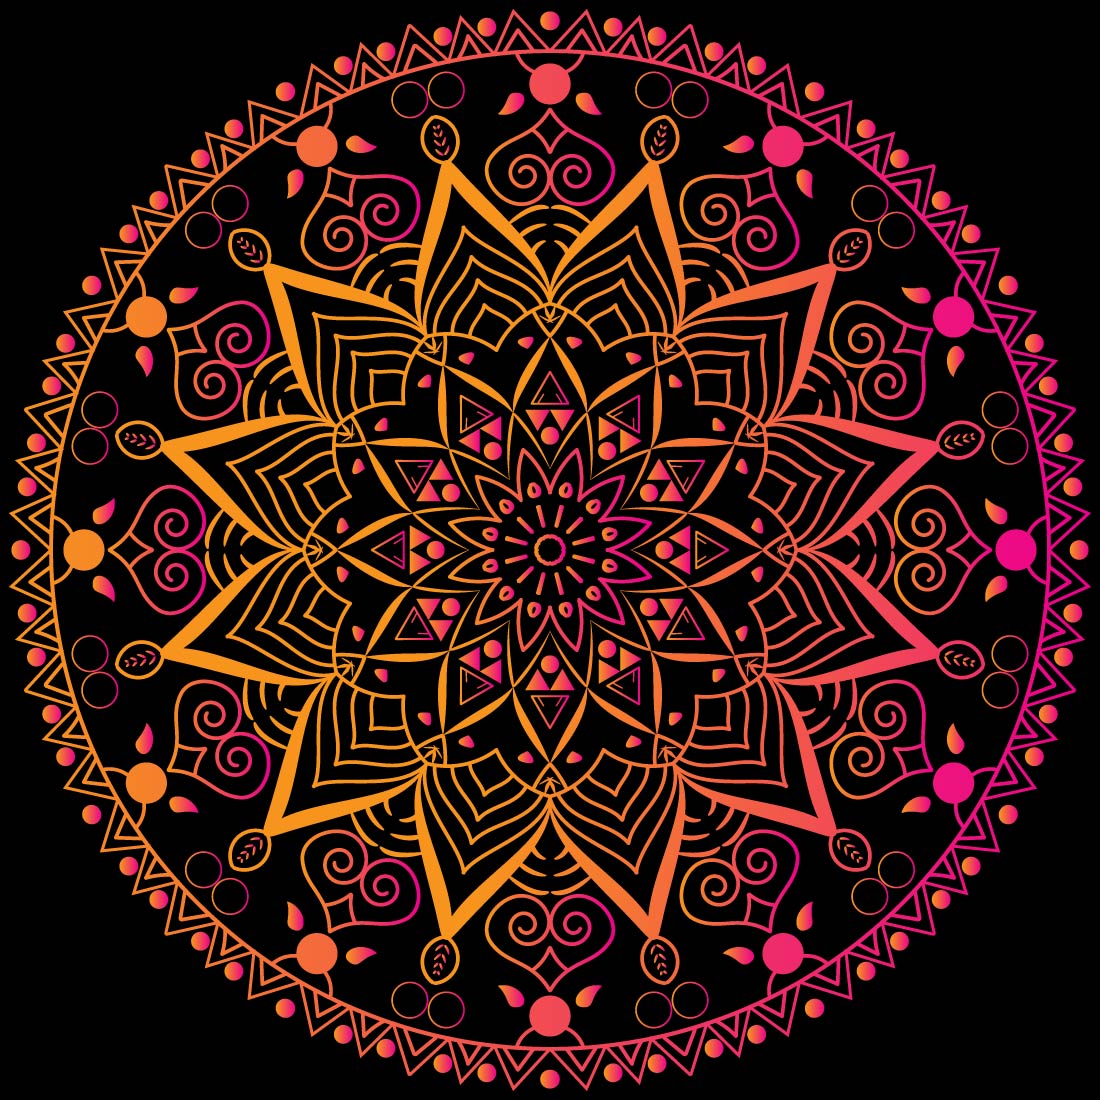 Image with charming round colorful mandala on black background.